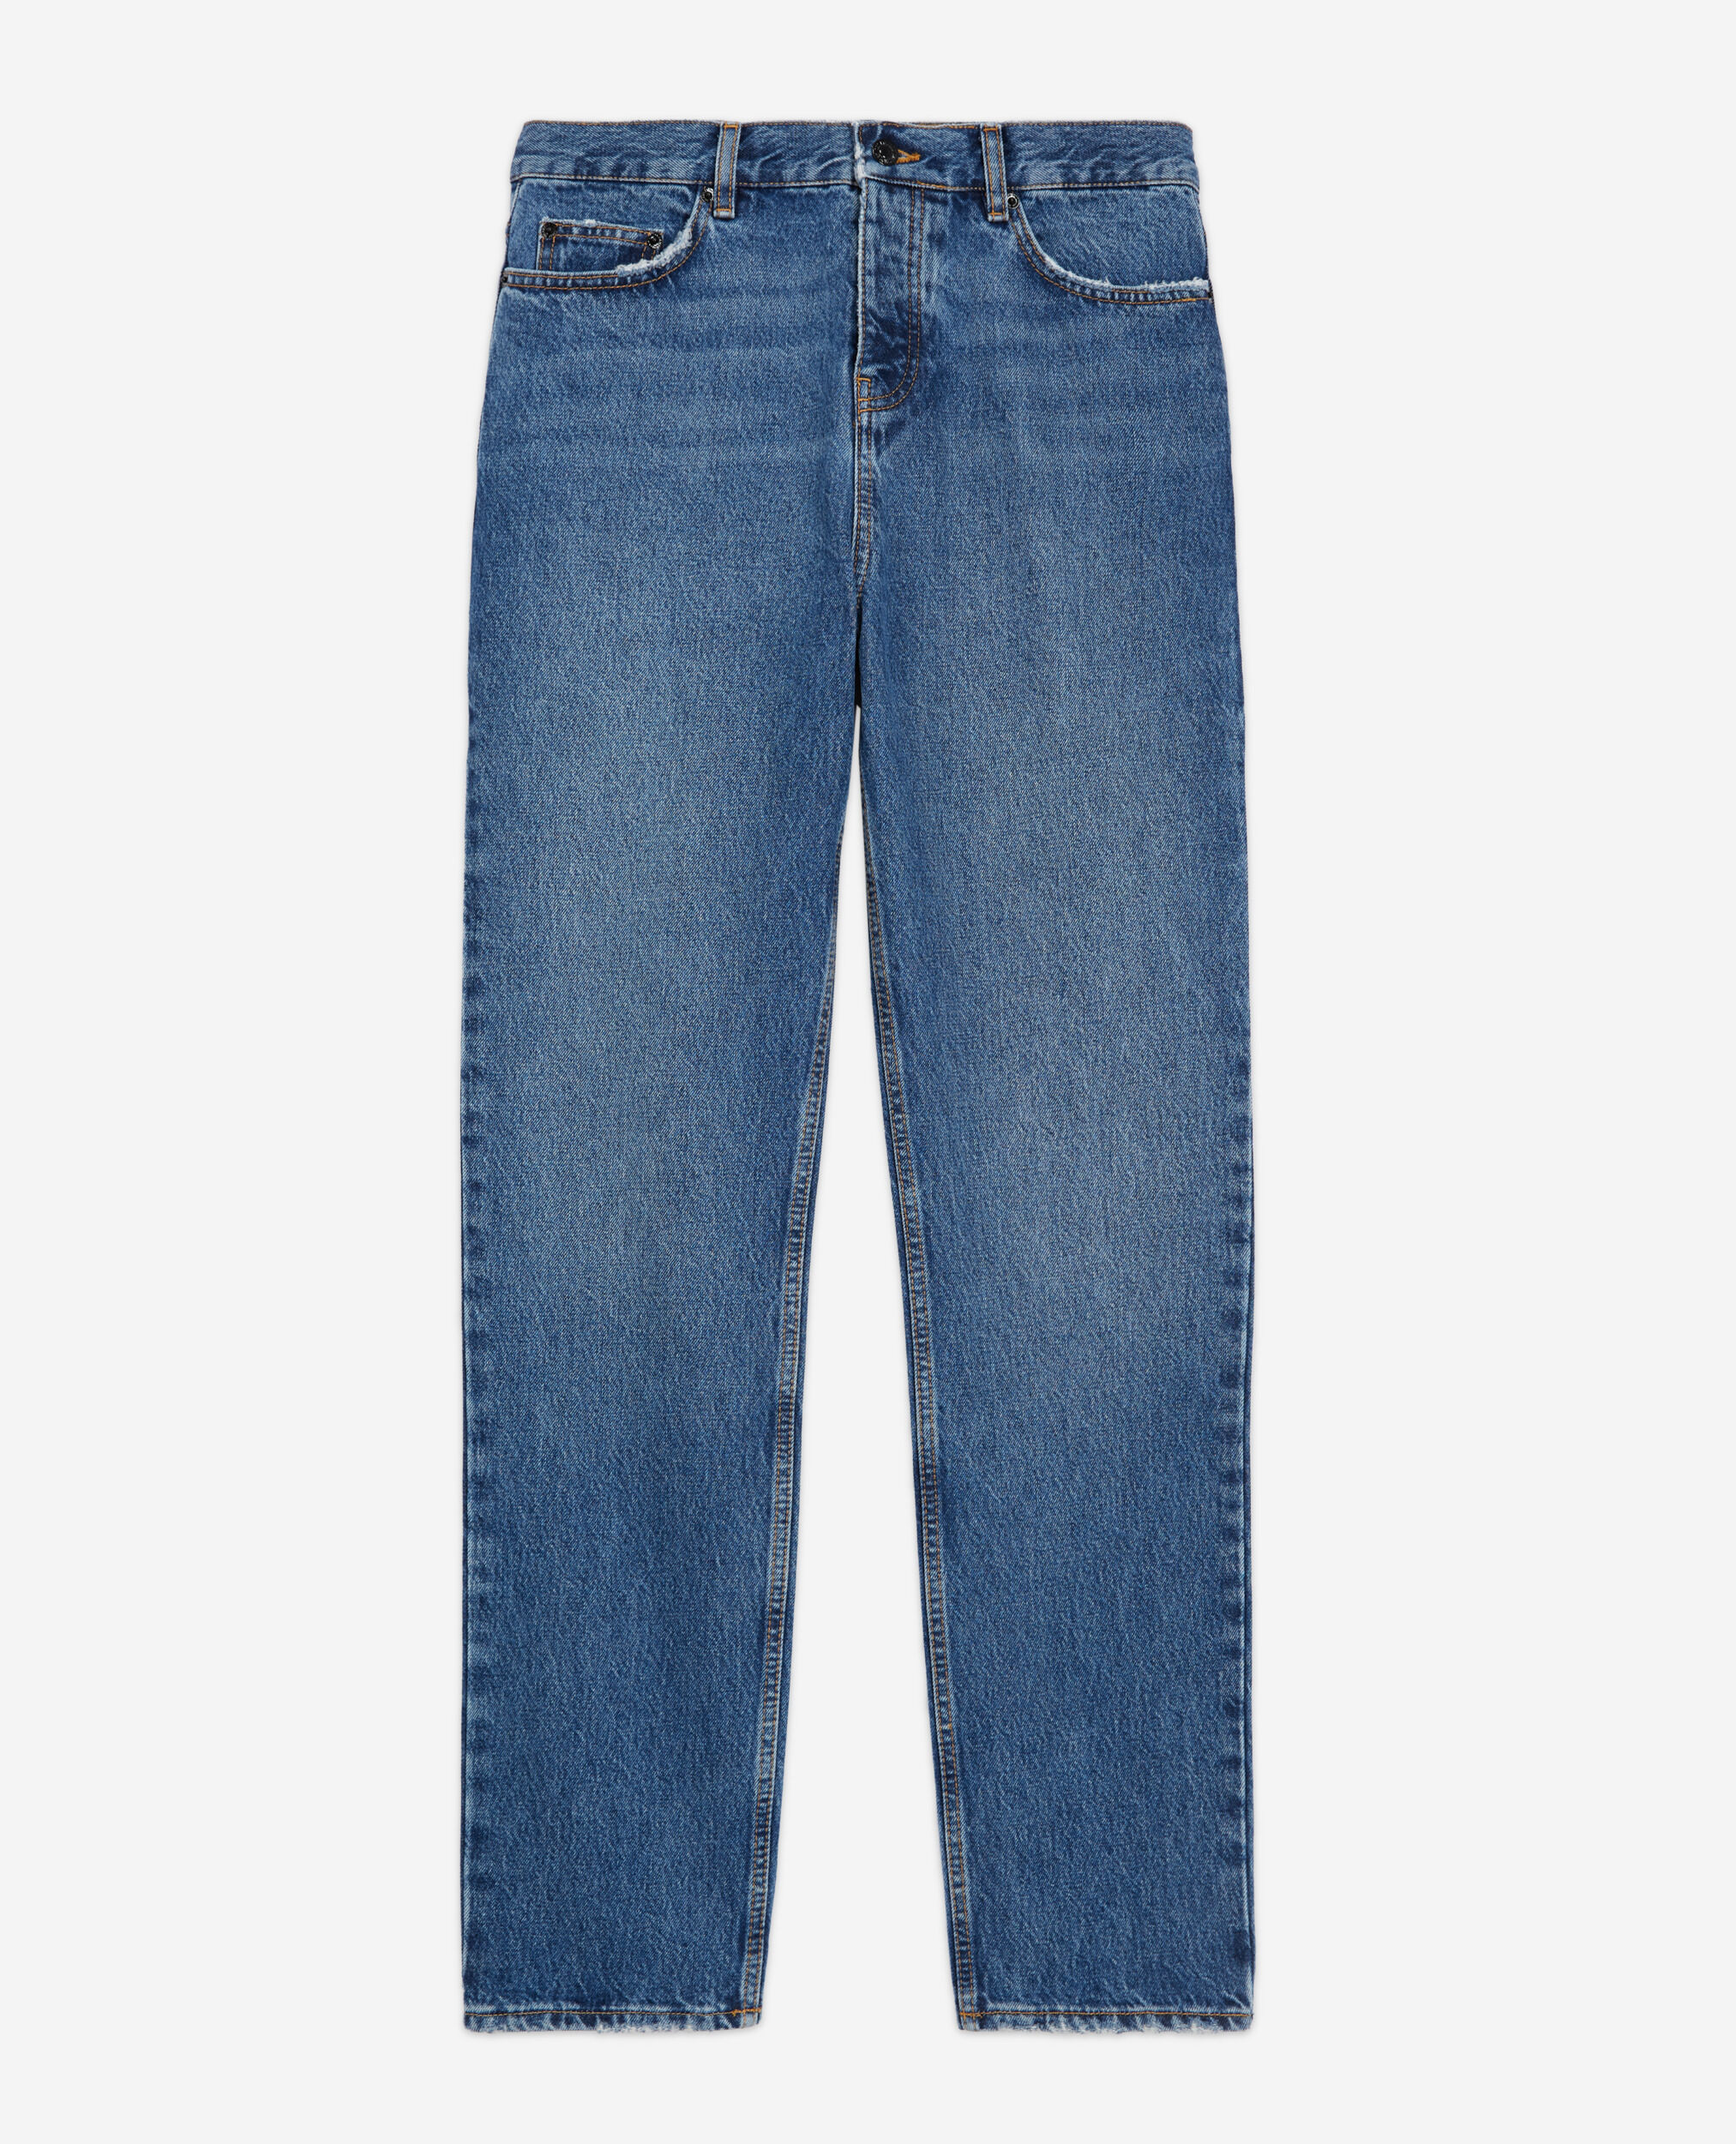 Damen Bekleidung Jeans Jeans mit gerader Passform The Kooples Denim HERREN in Blau 